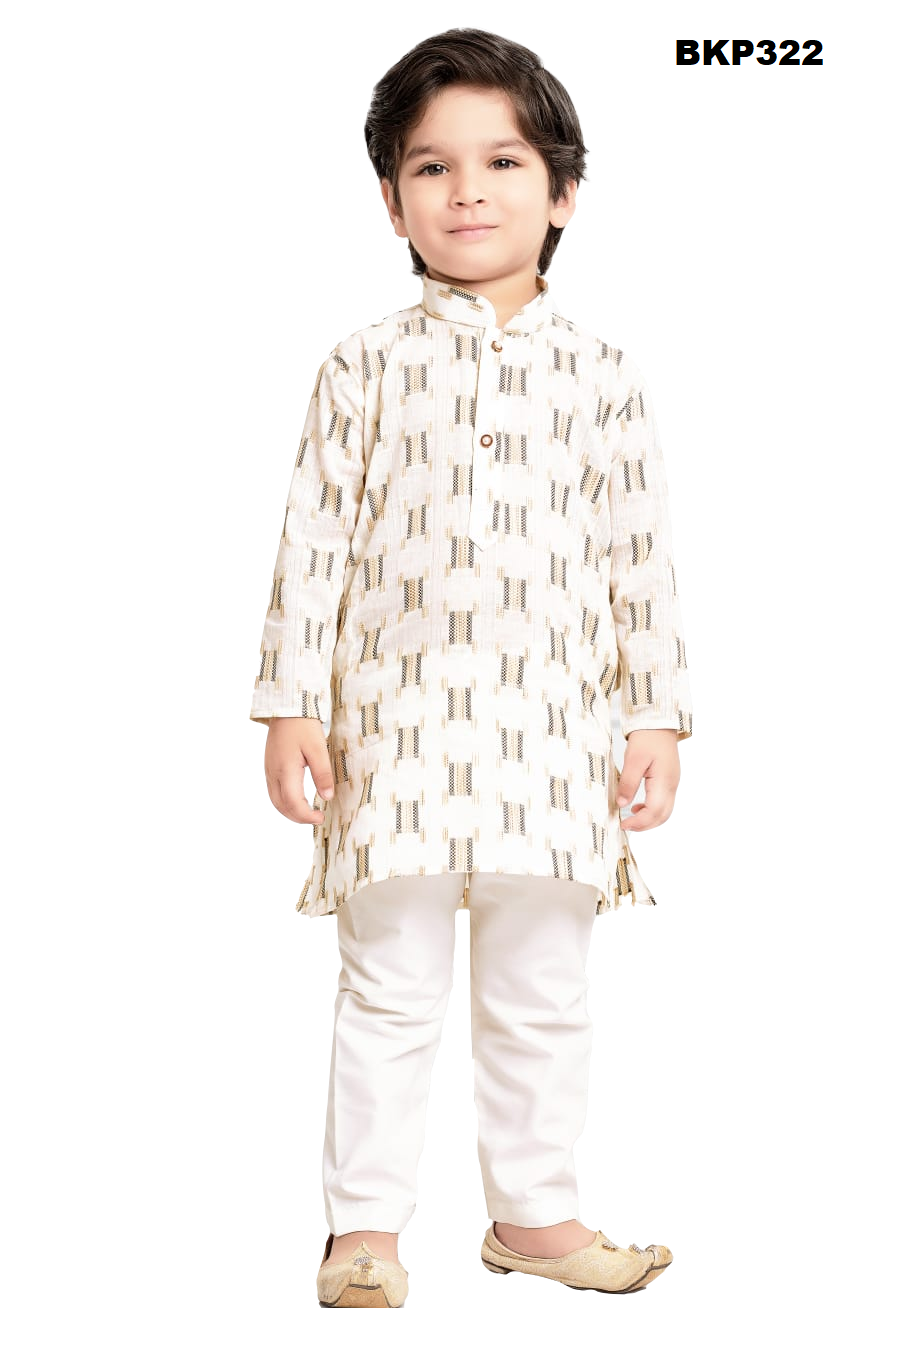 BKP322 - White and gold thread weave cotton kurta pajama set